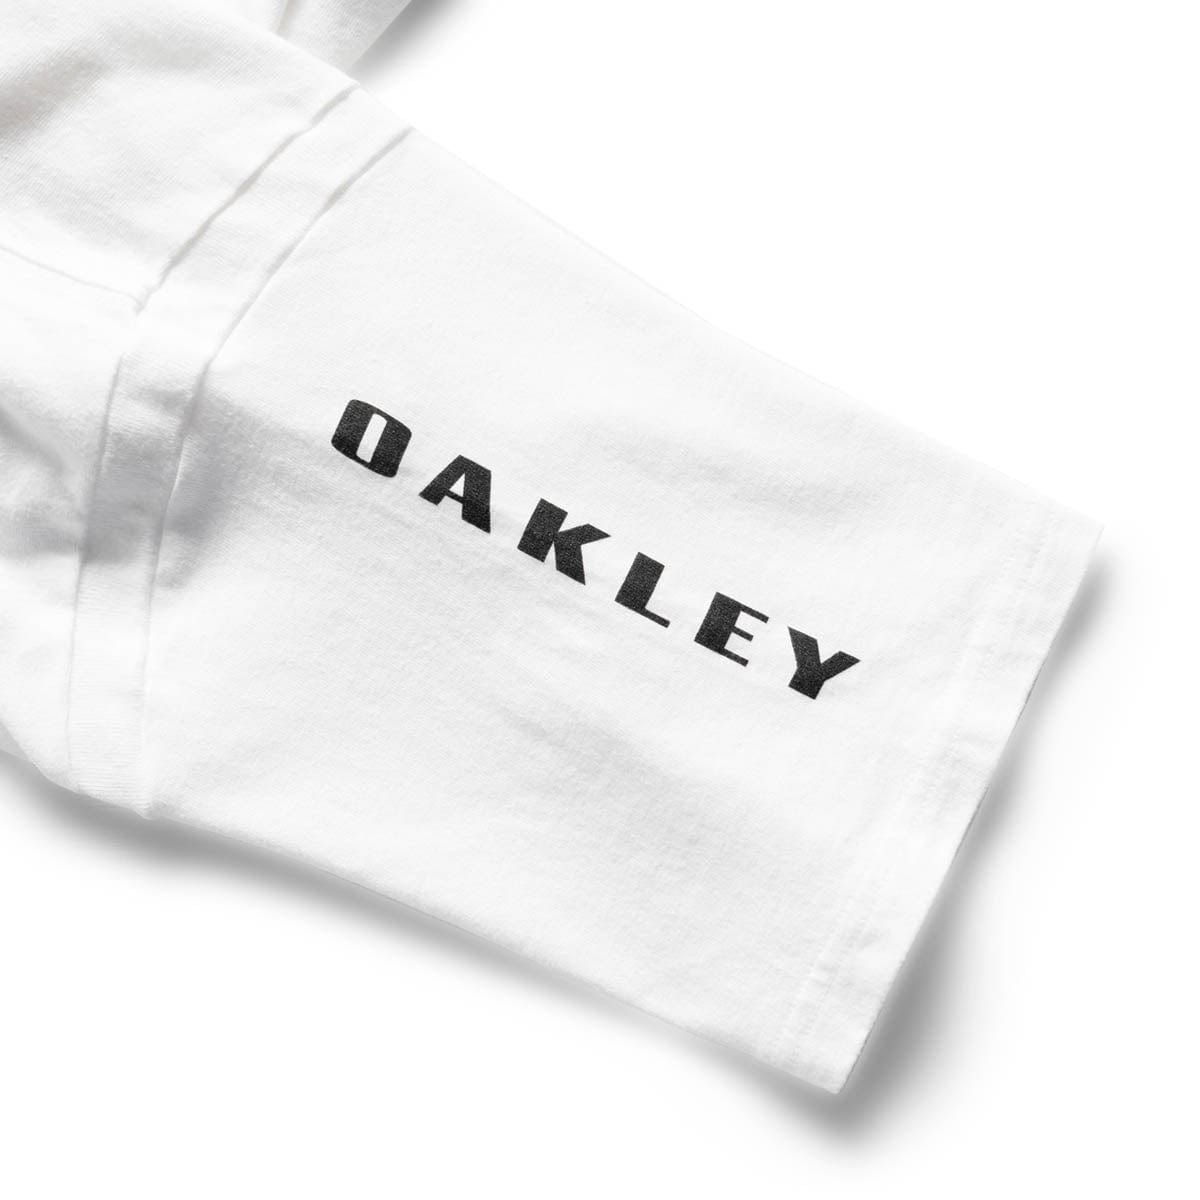 Oakley T-Shirts X FRAGMENT SHORT SLEEVE T-SHIRT